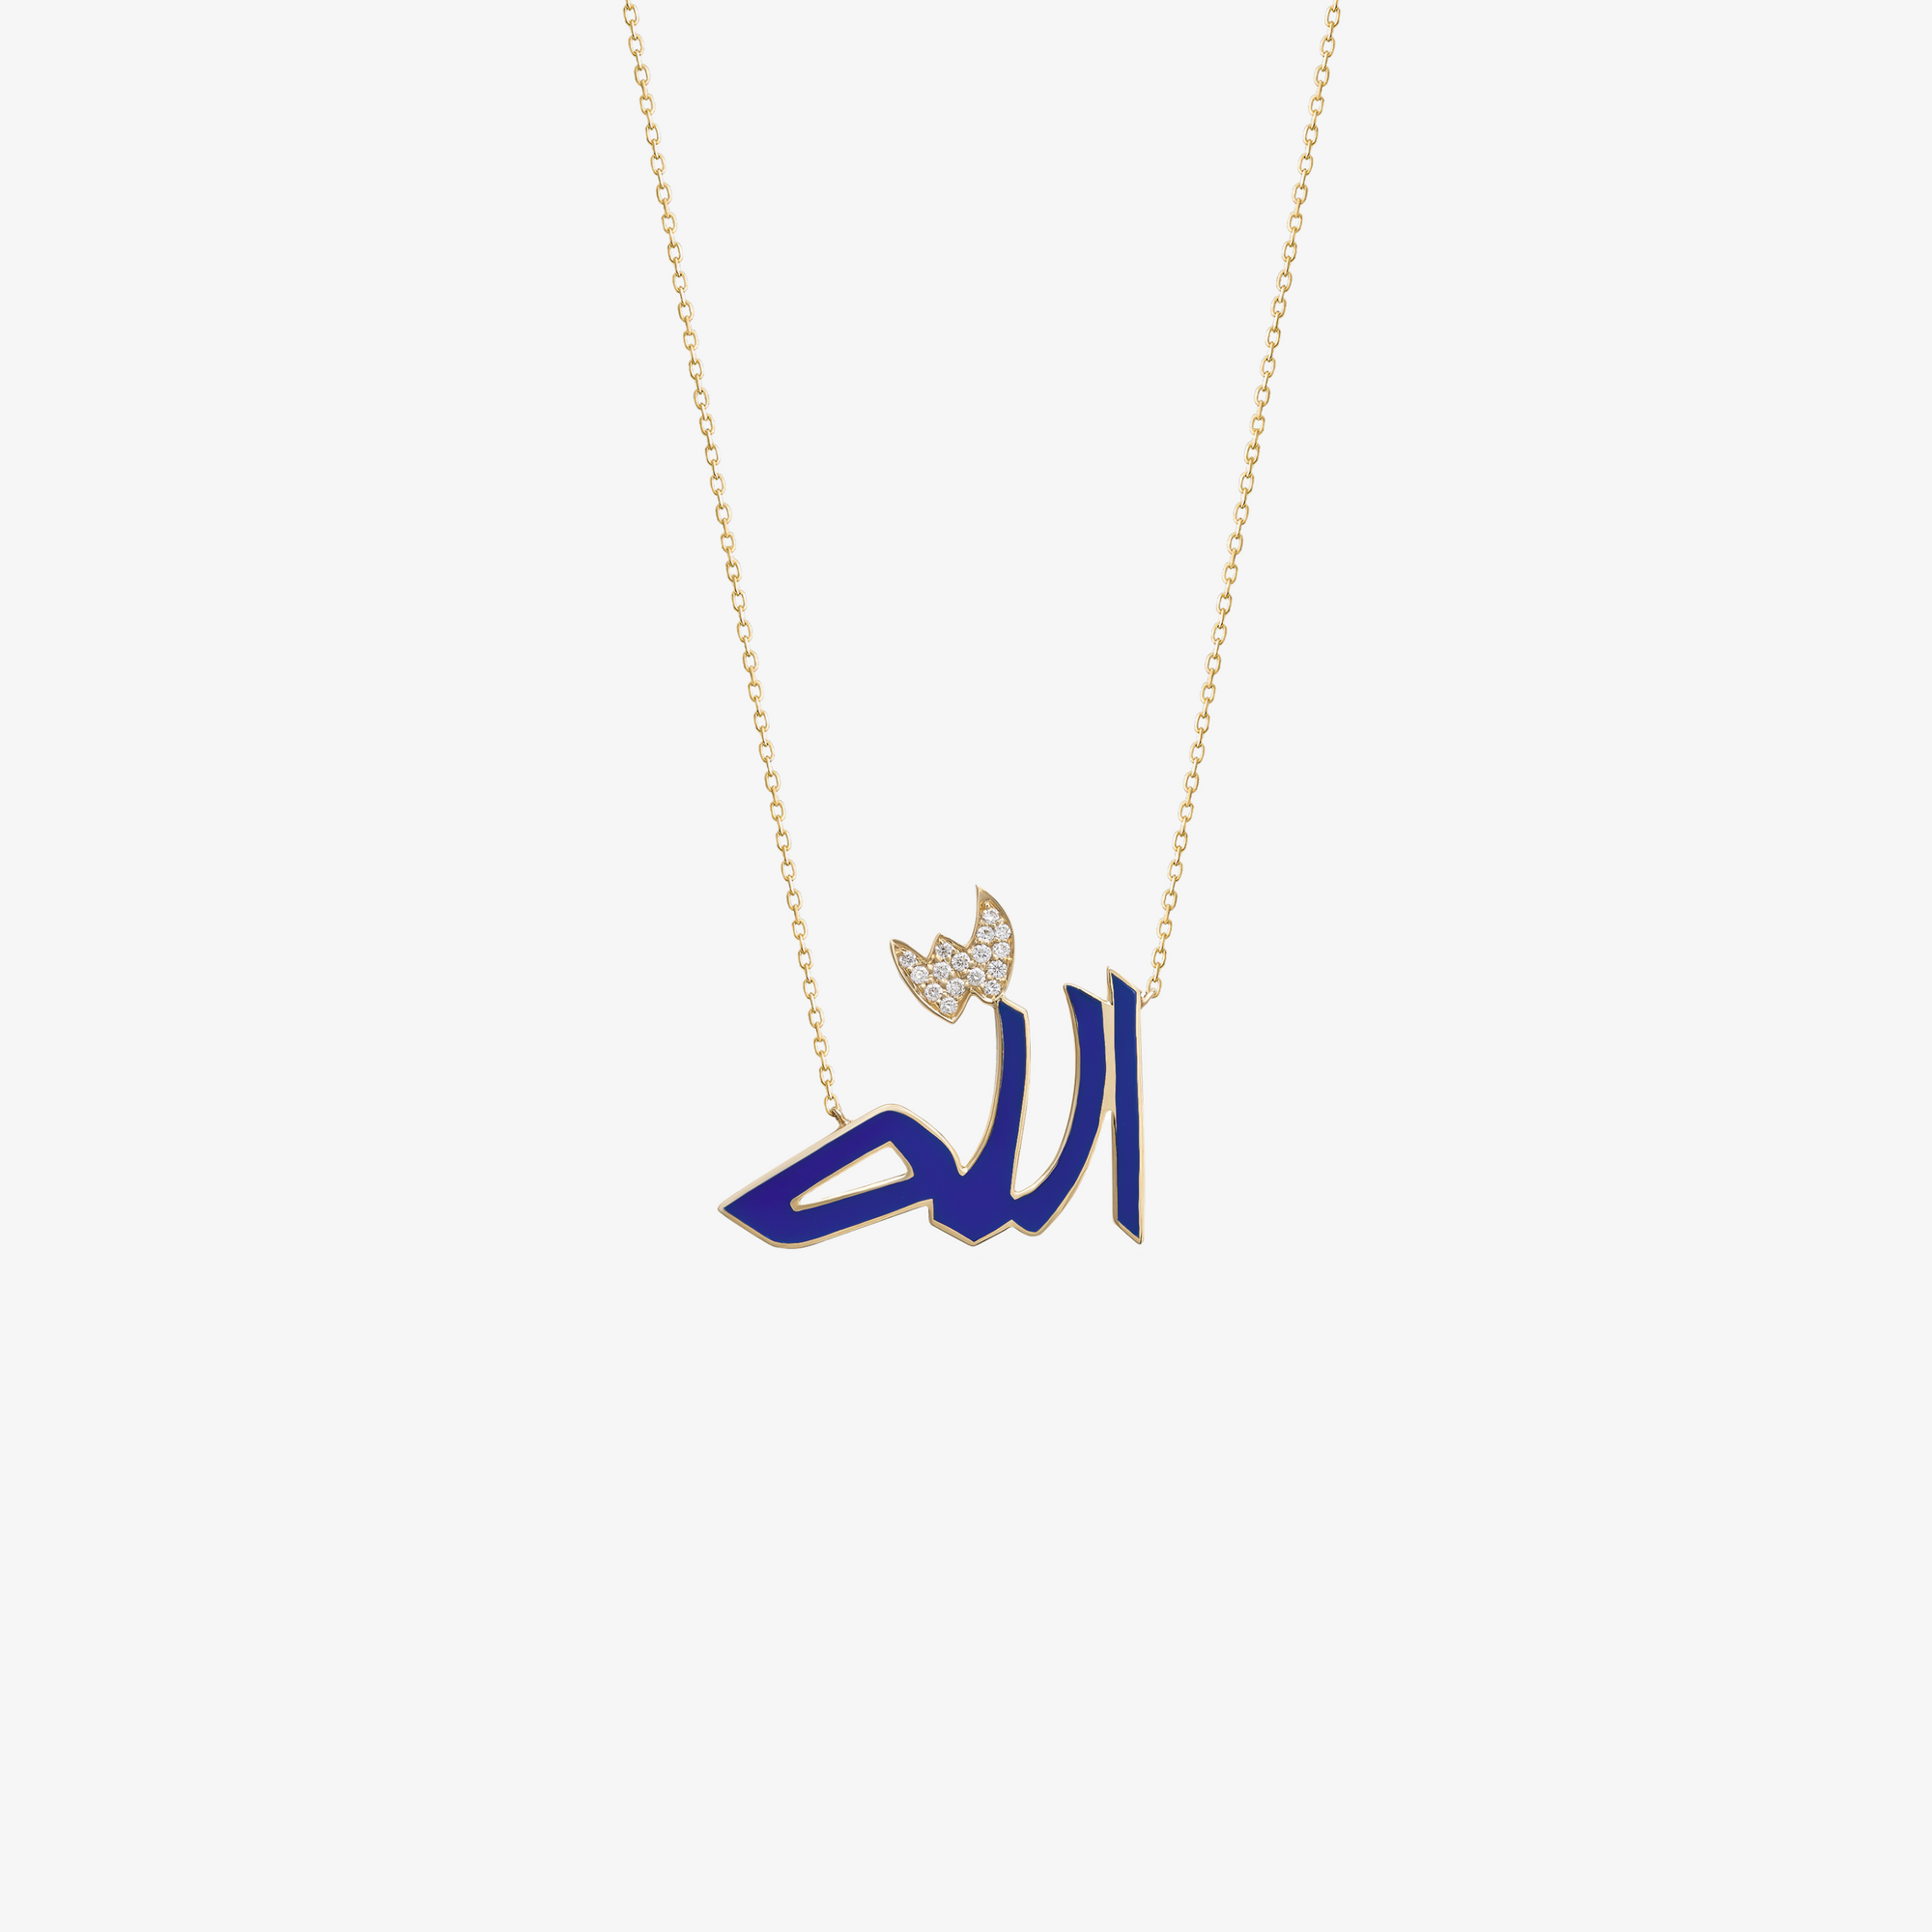 OULA - 18K Gold & Enamel "Allah" Necklace. 3 cm